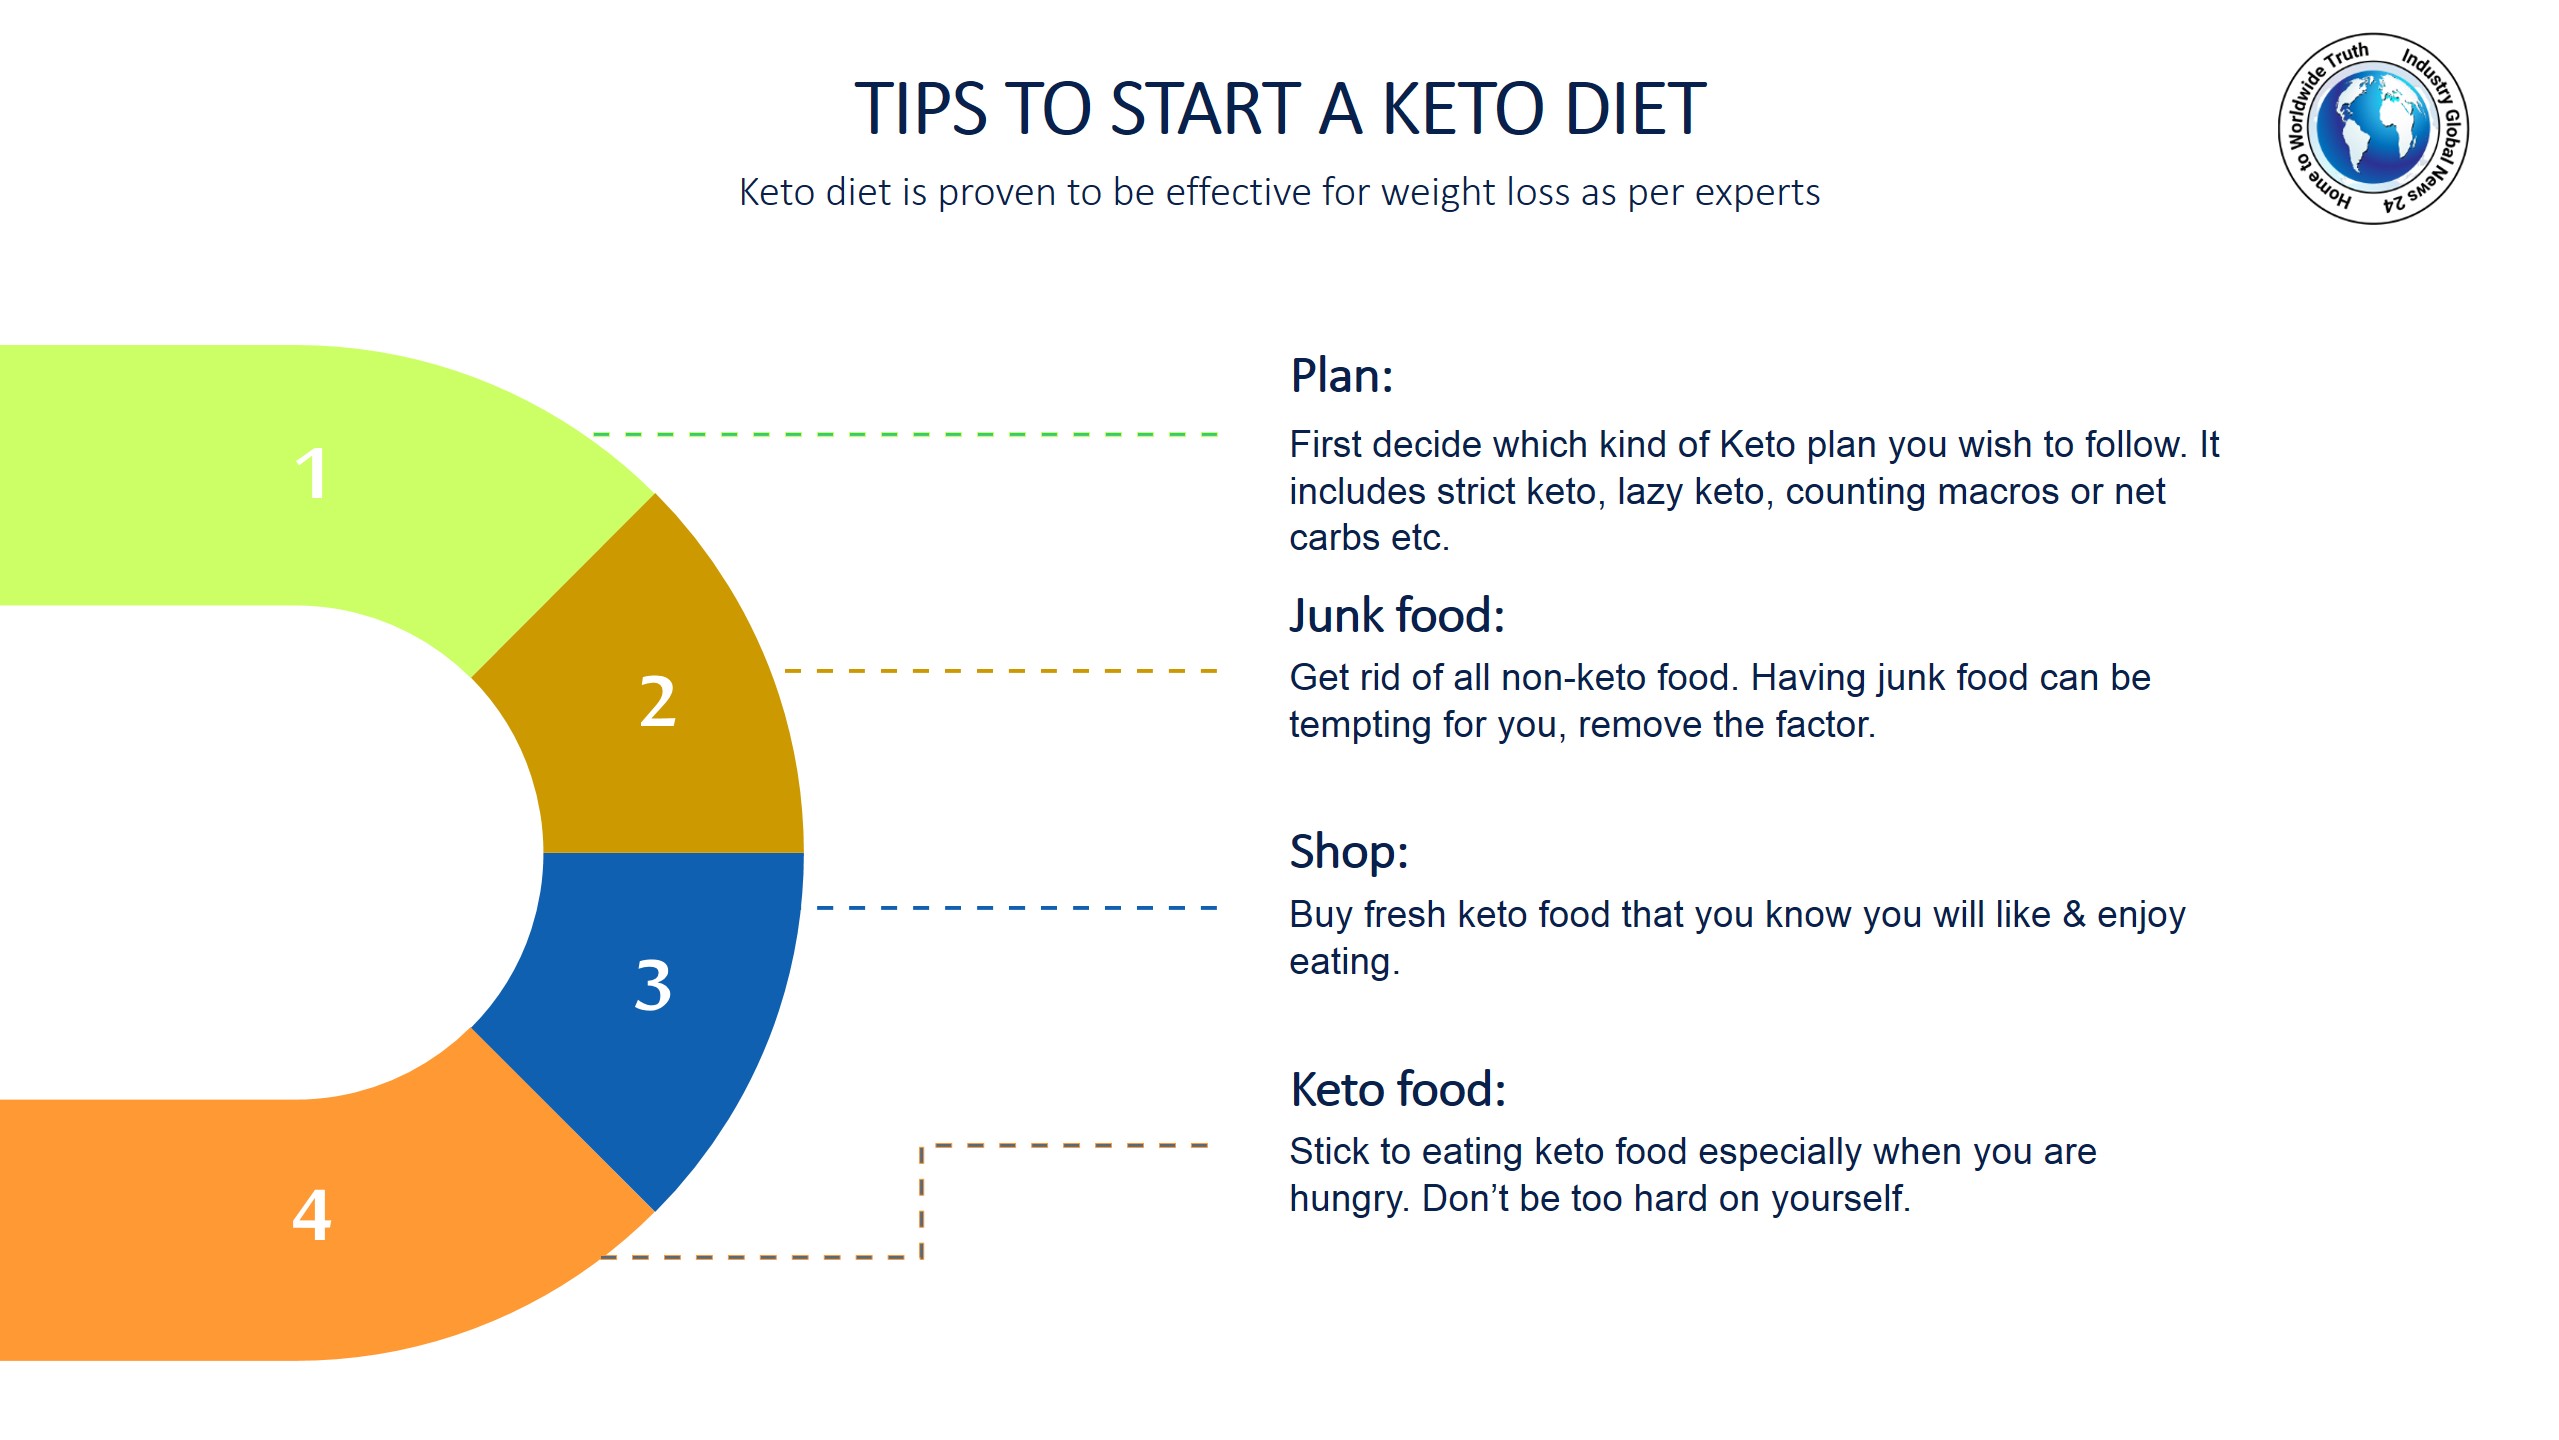 Tips to start a Keto diet